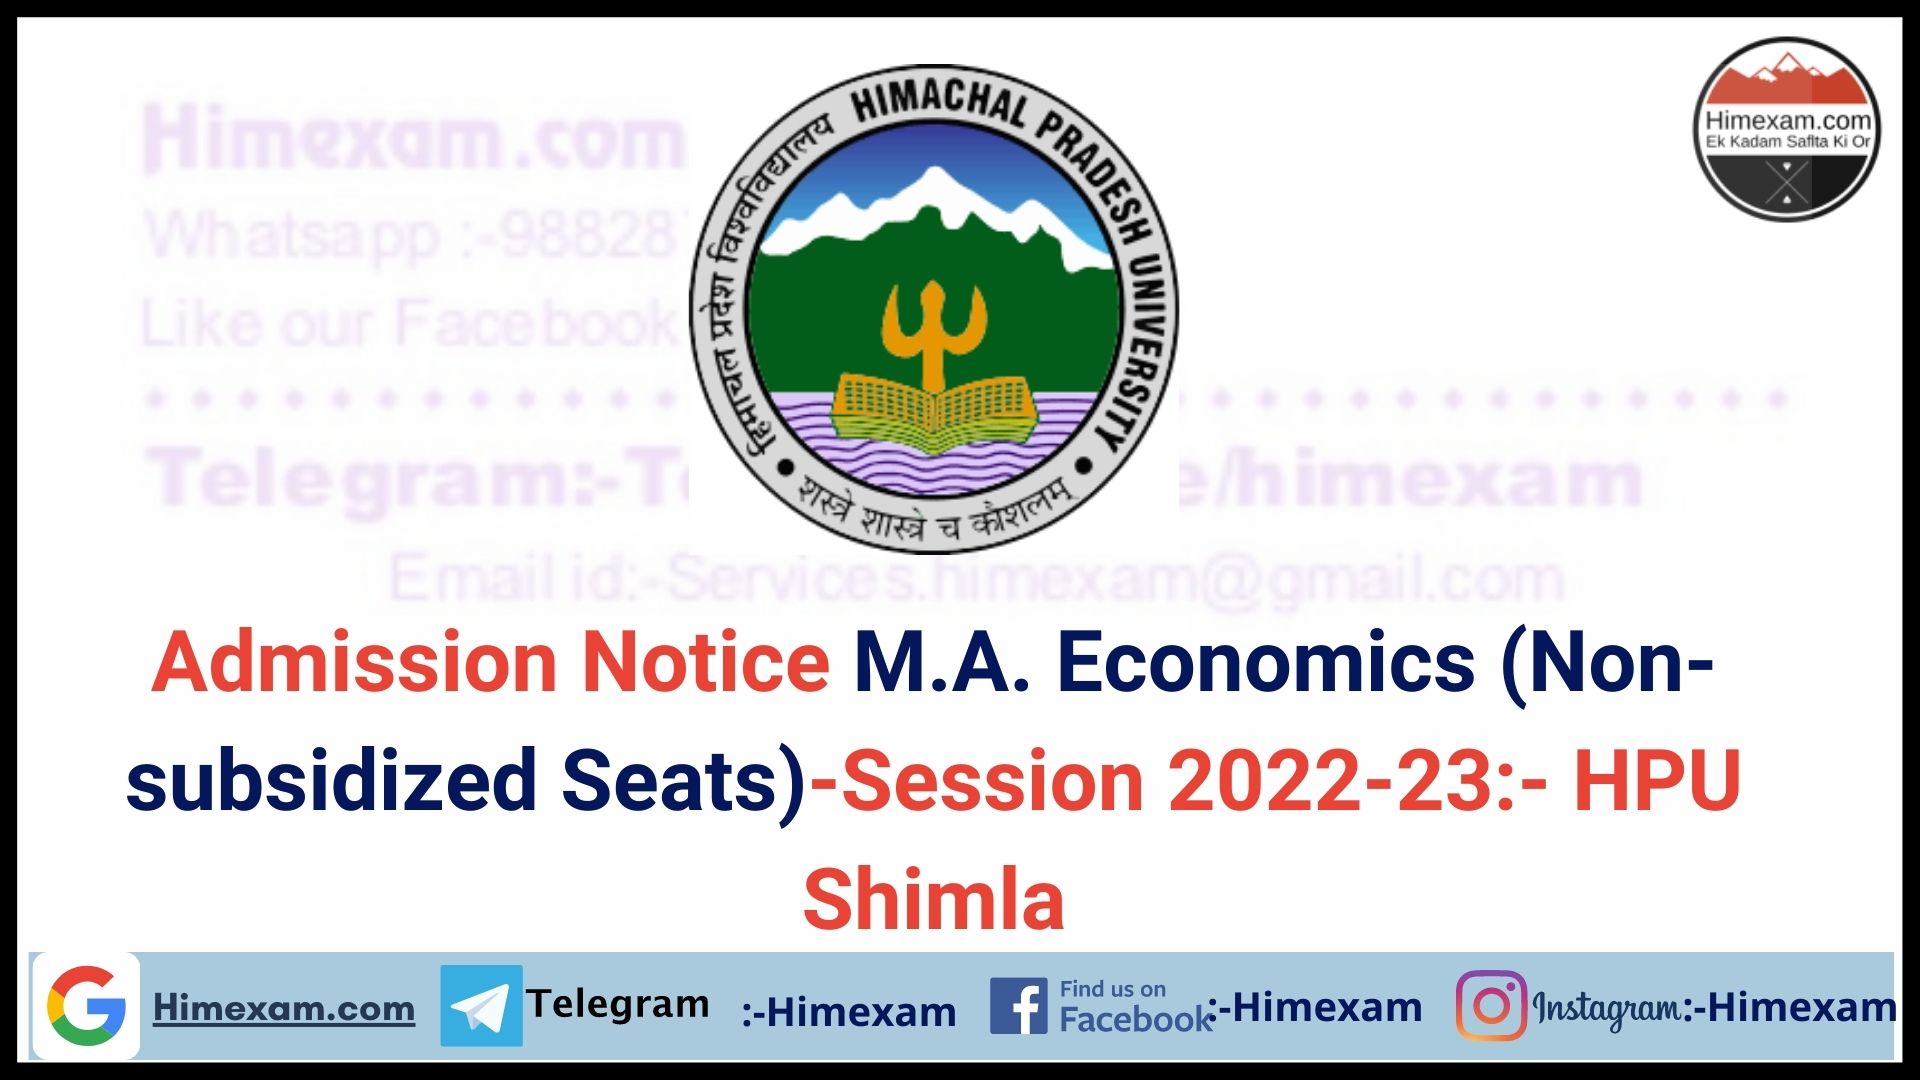 Admission Notice M.A. Economics (Non-subsidized Seats)-Session 2022-23:- HPU Shimla